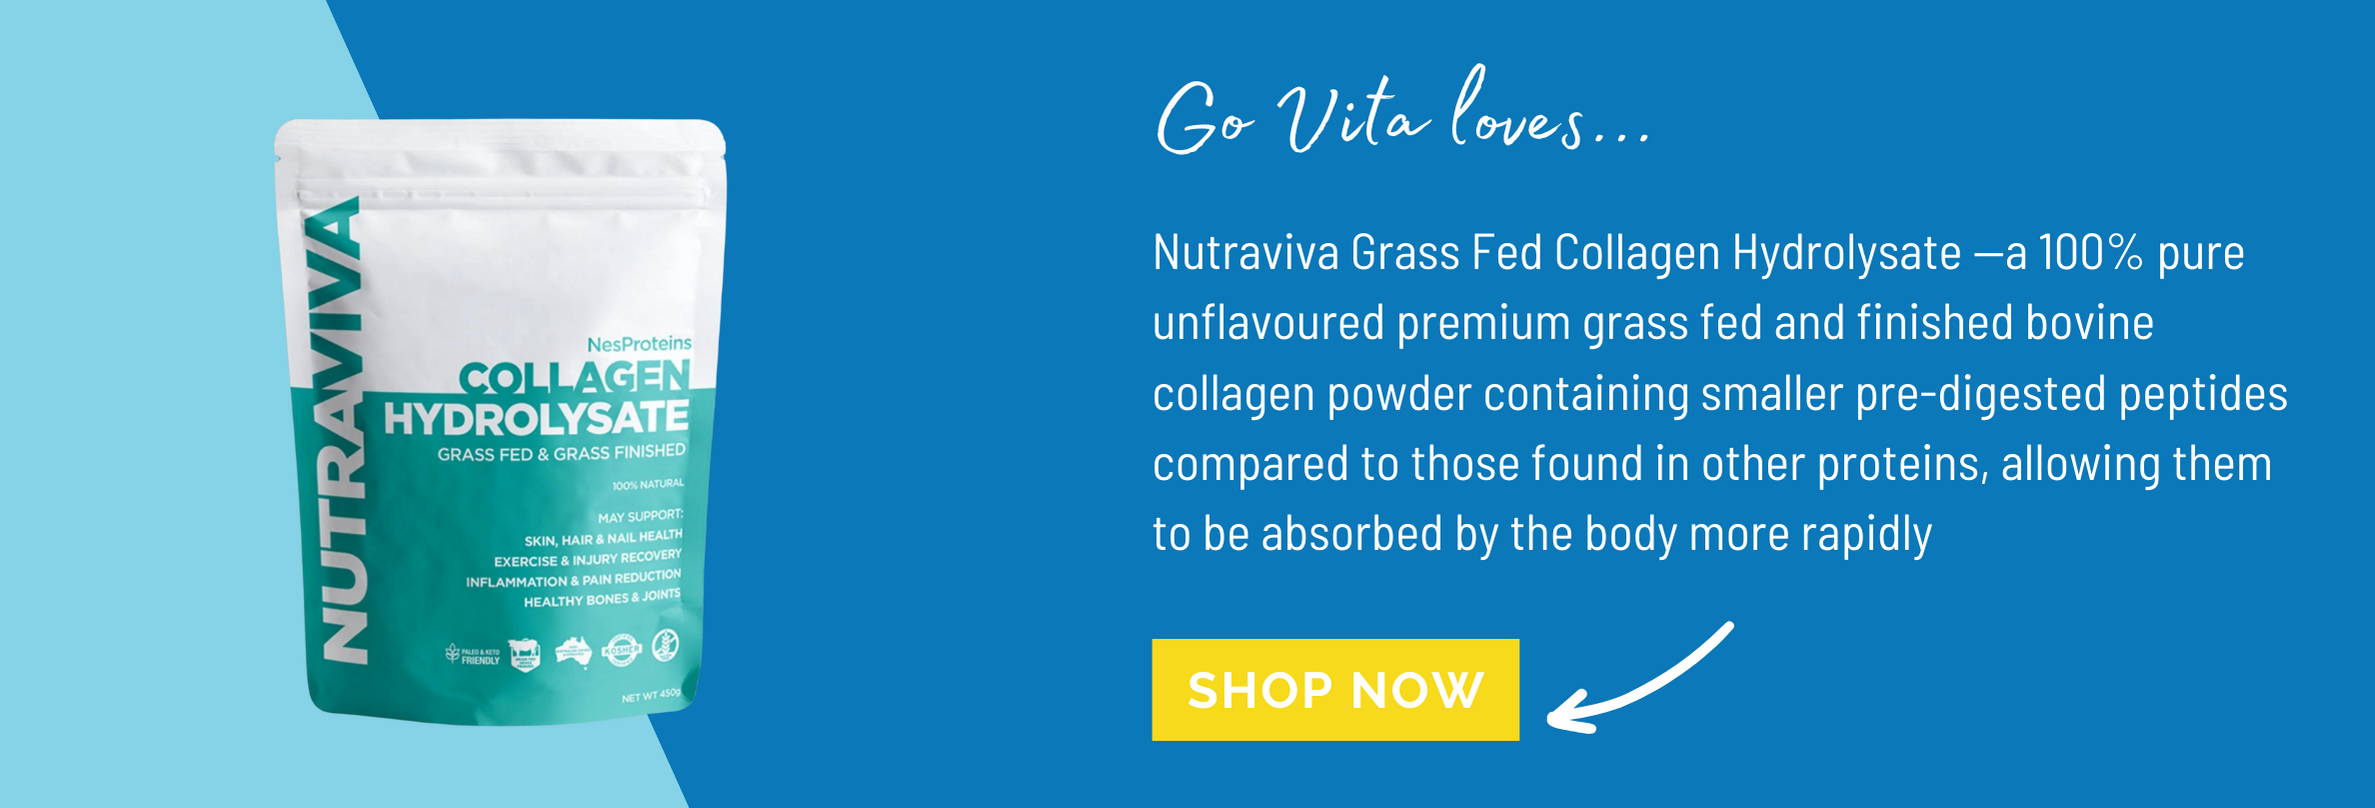 Nutraviva Grass Fed Collagen Hydrolysate